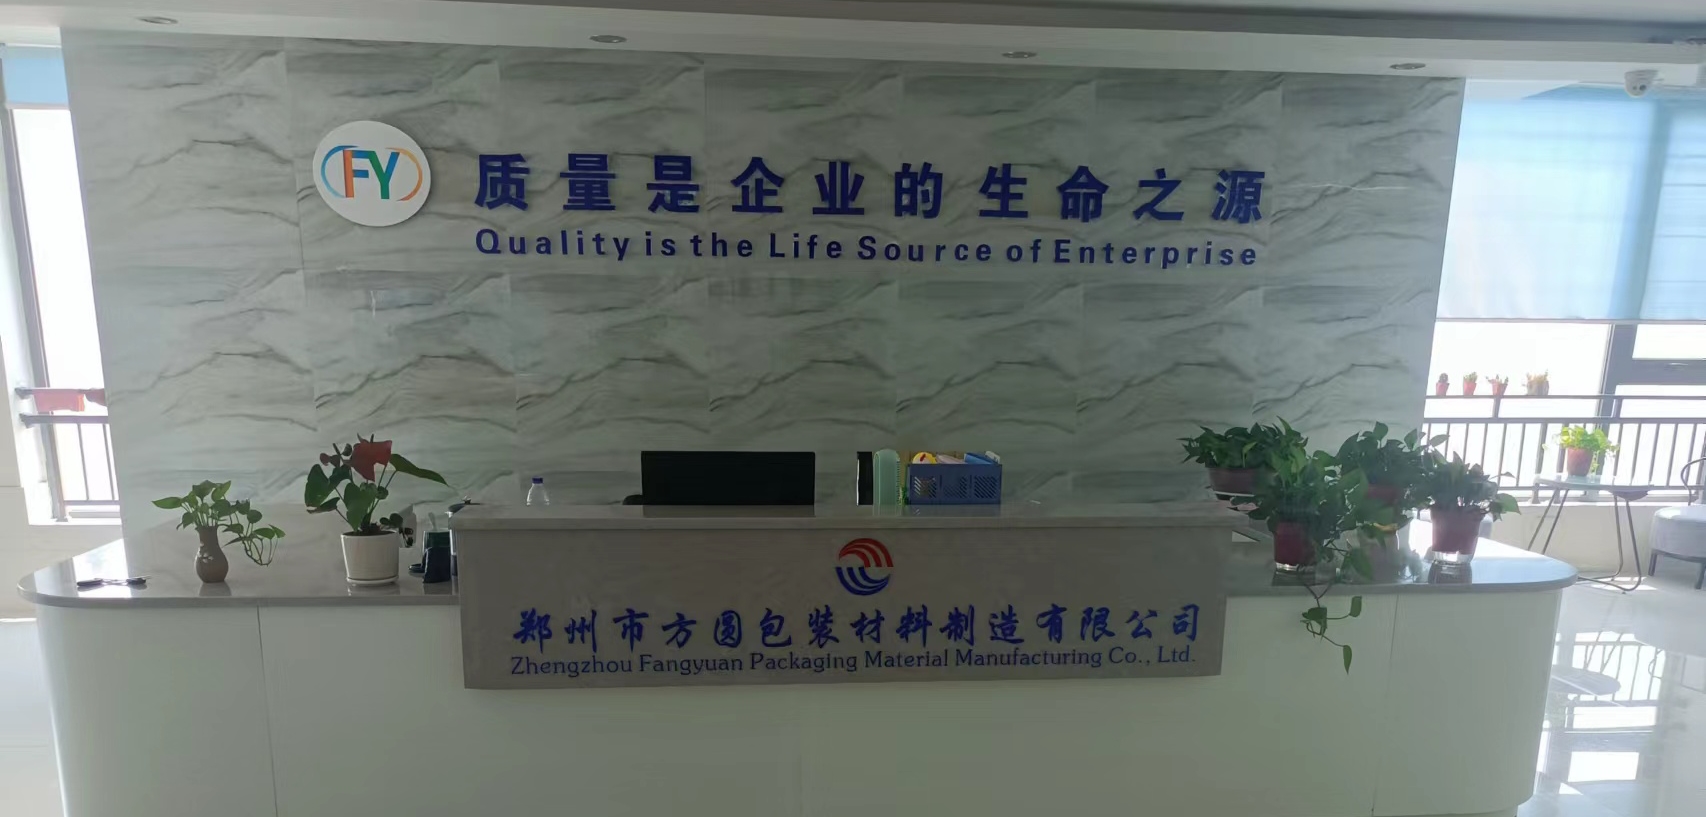 Warmly celebrate Zhengzhou Fangyuan Packaging Material Manufacturing Co., Ltd. website opened!